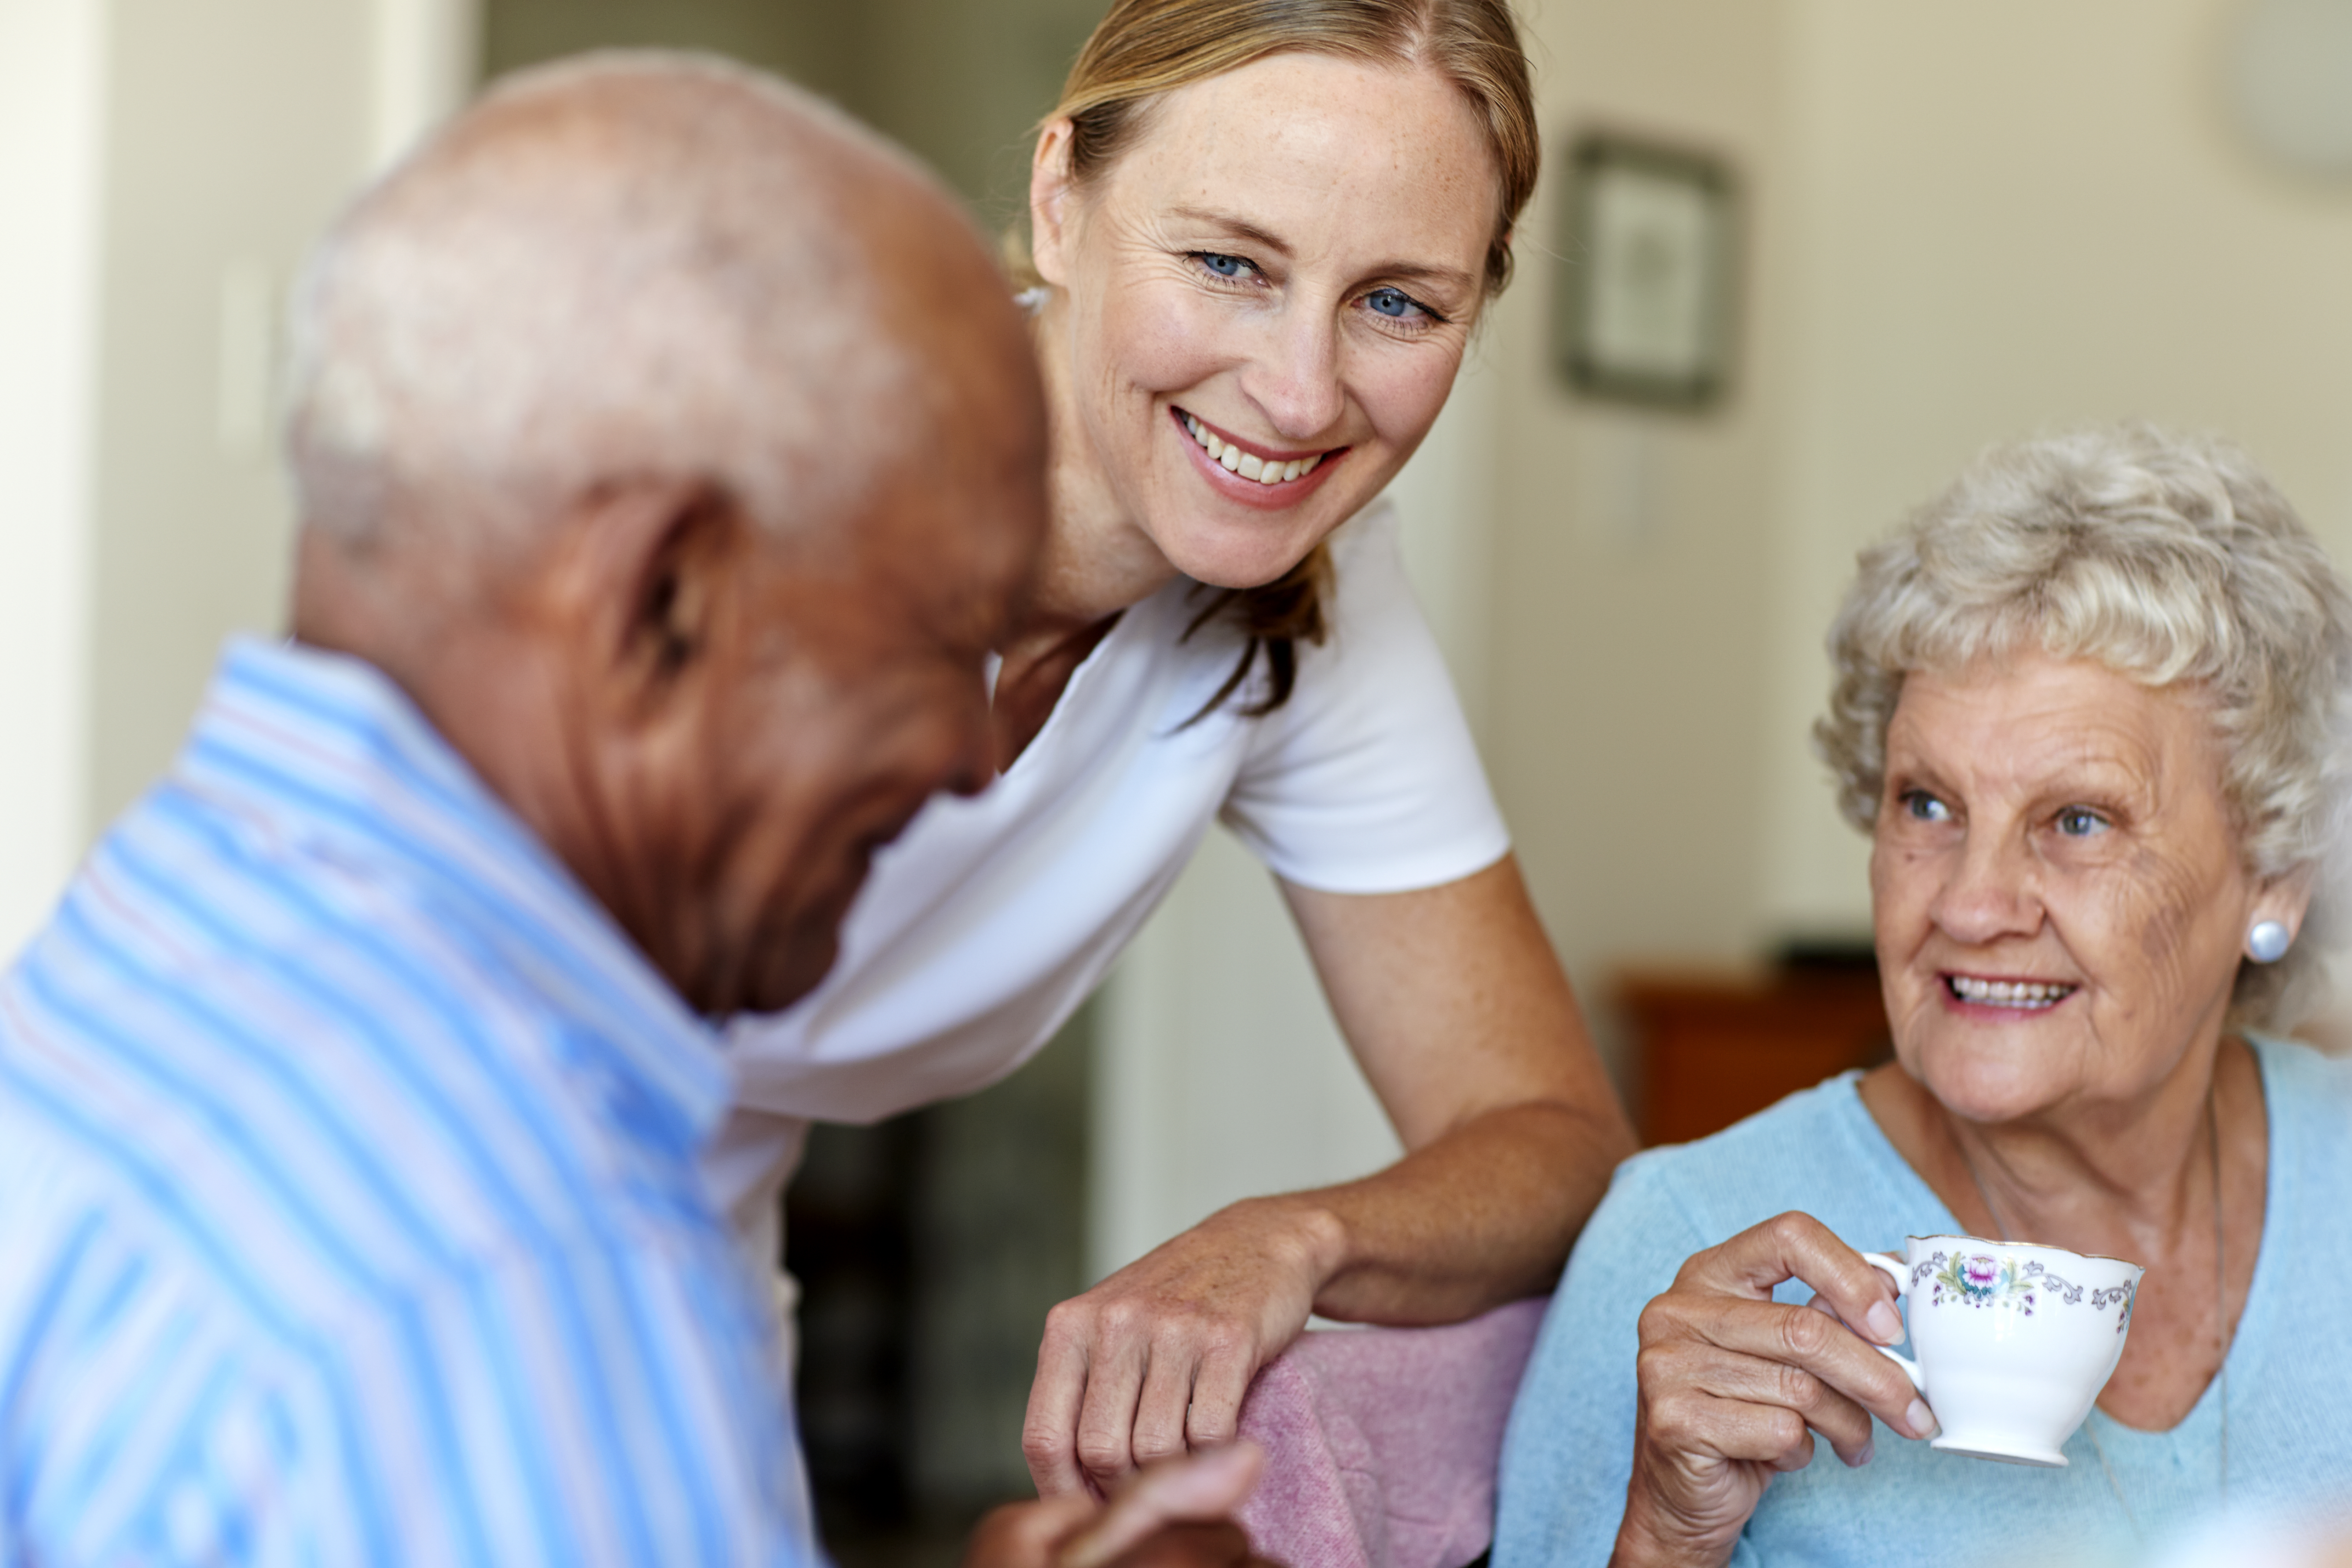 Caretaker with senior people in nursing home